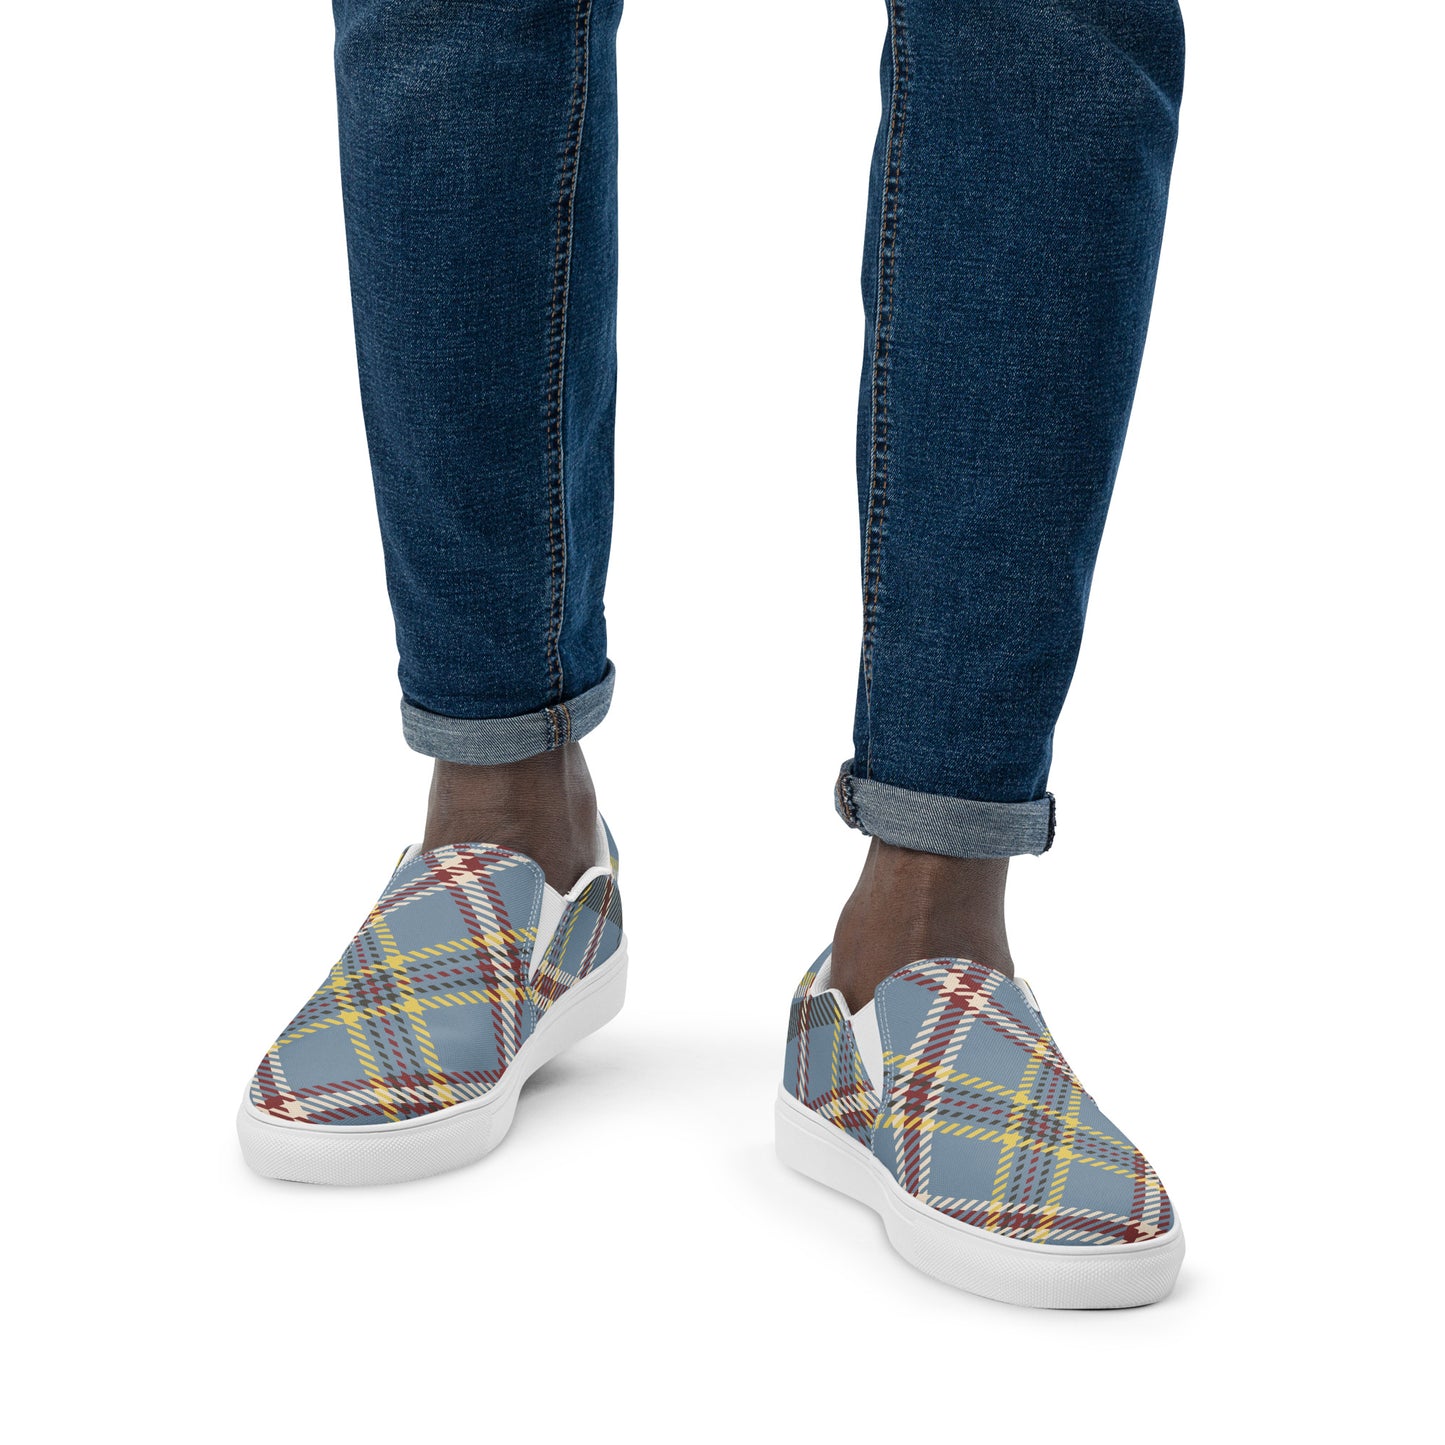 COM4T Gray Plad Men’s Slip-On Canvas Fashion Shoes by IOBI Original Apparel